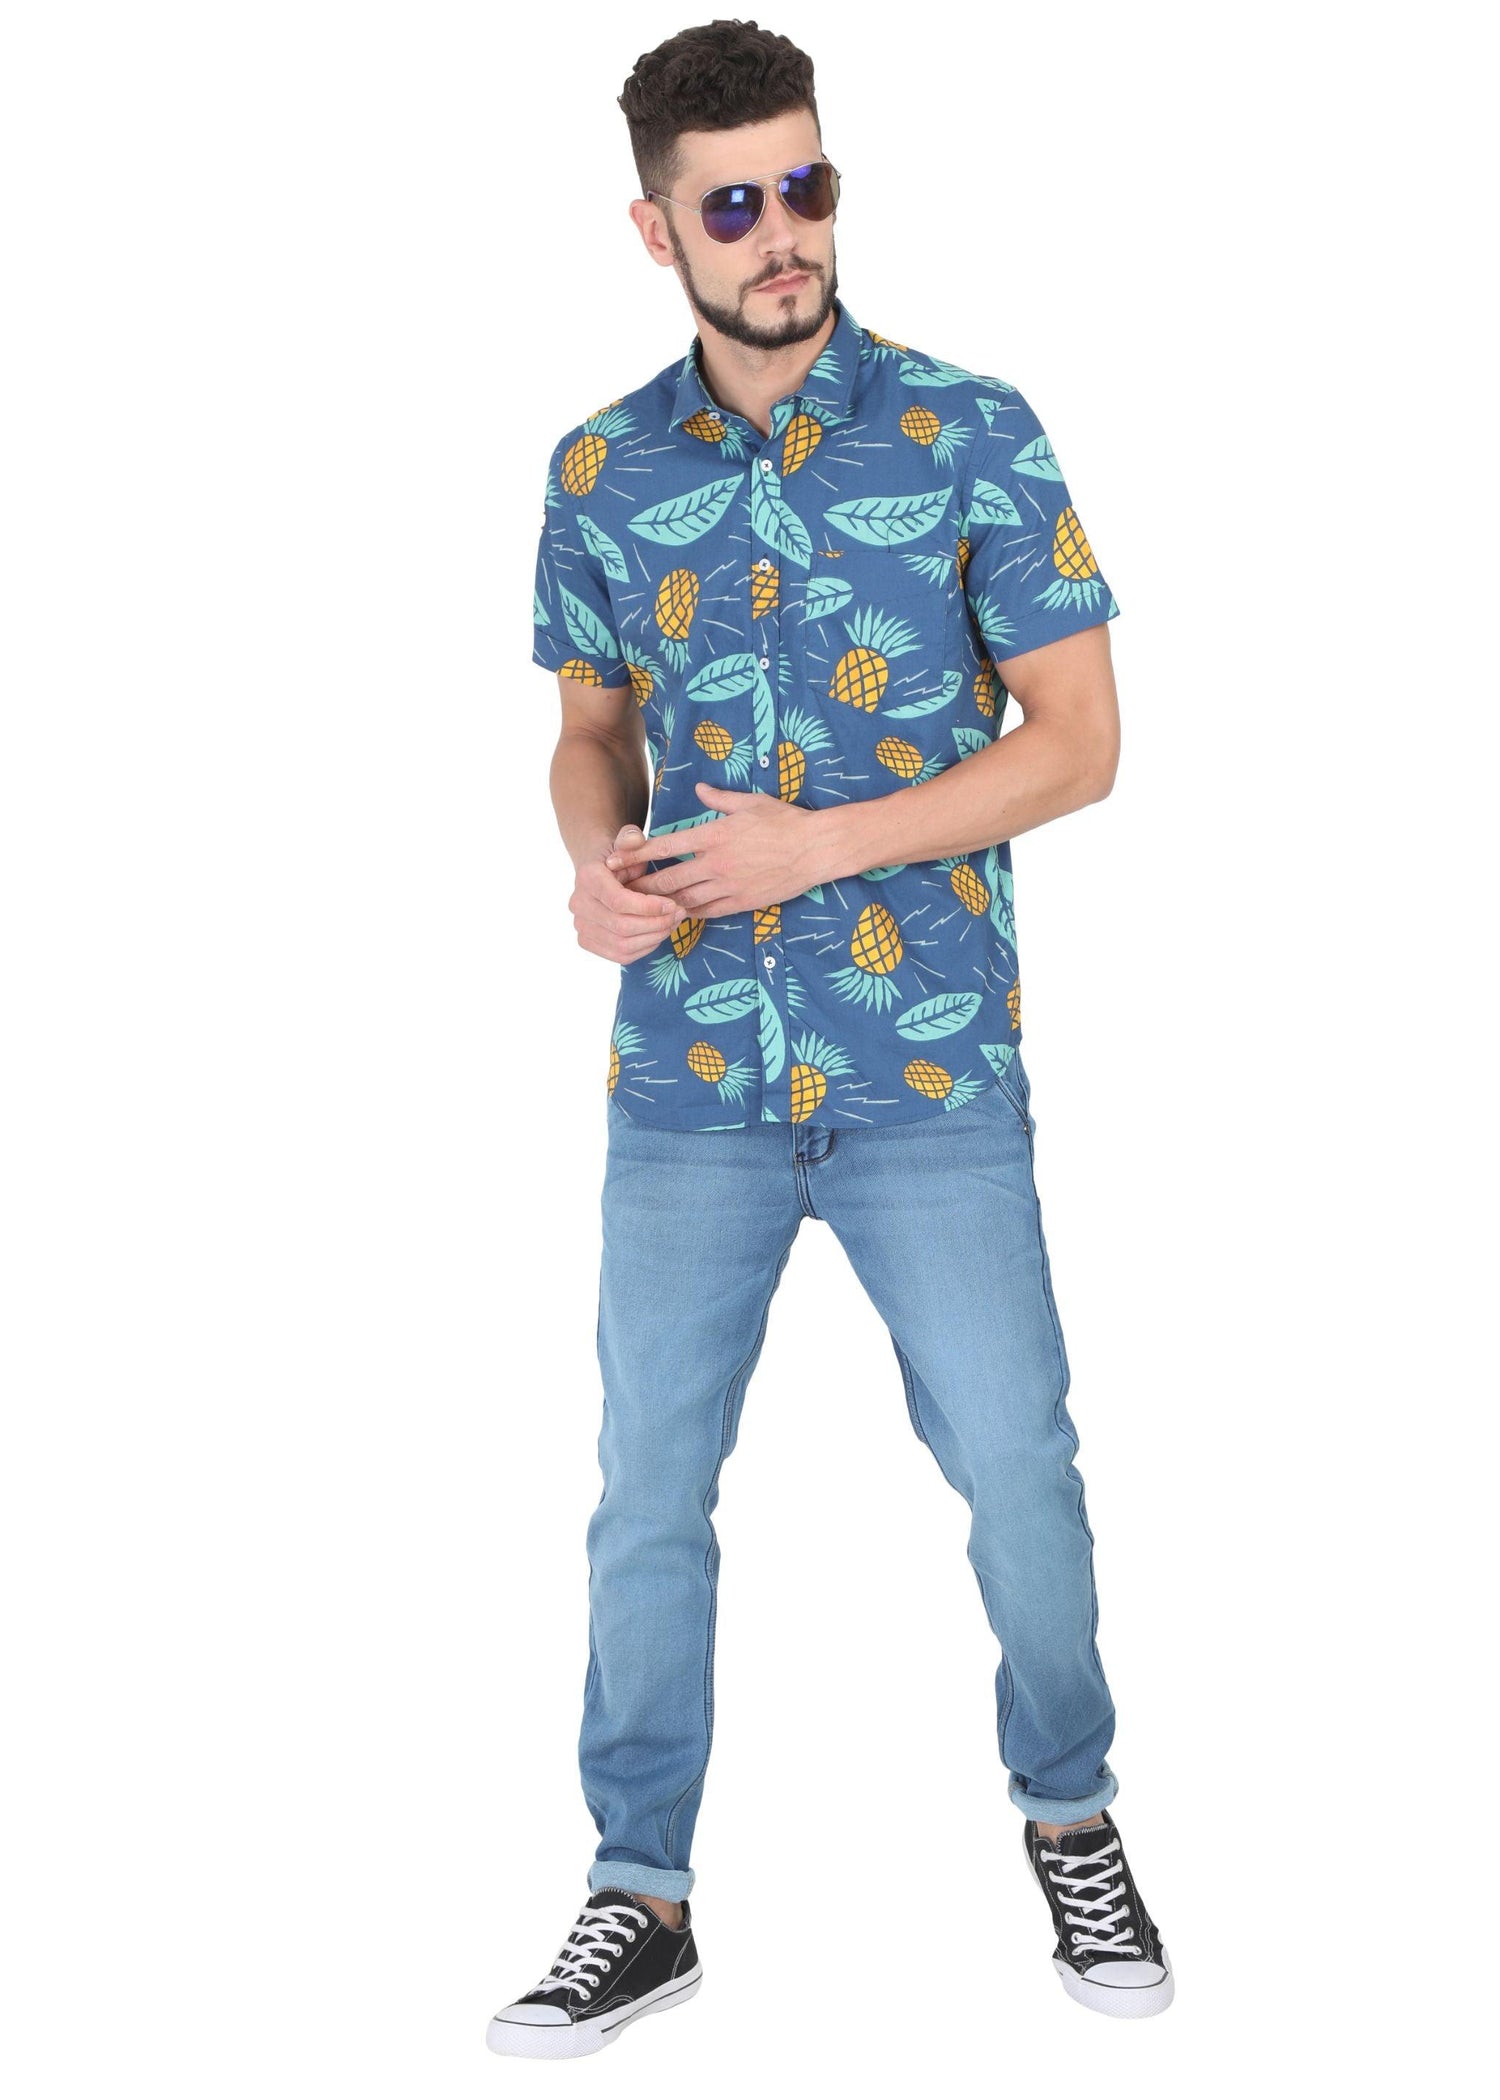 Tusok-blue-pineappleFeatured Shirt, Vacation-Printed Shirtimage-Blue Pineapple (6)